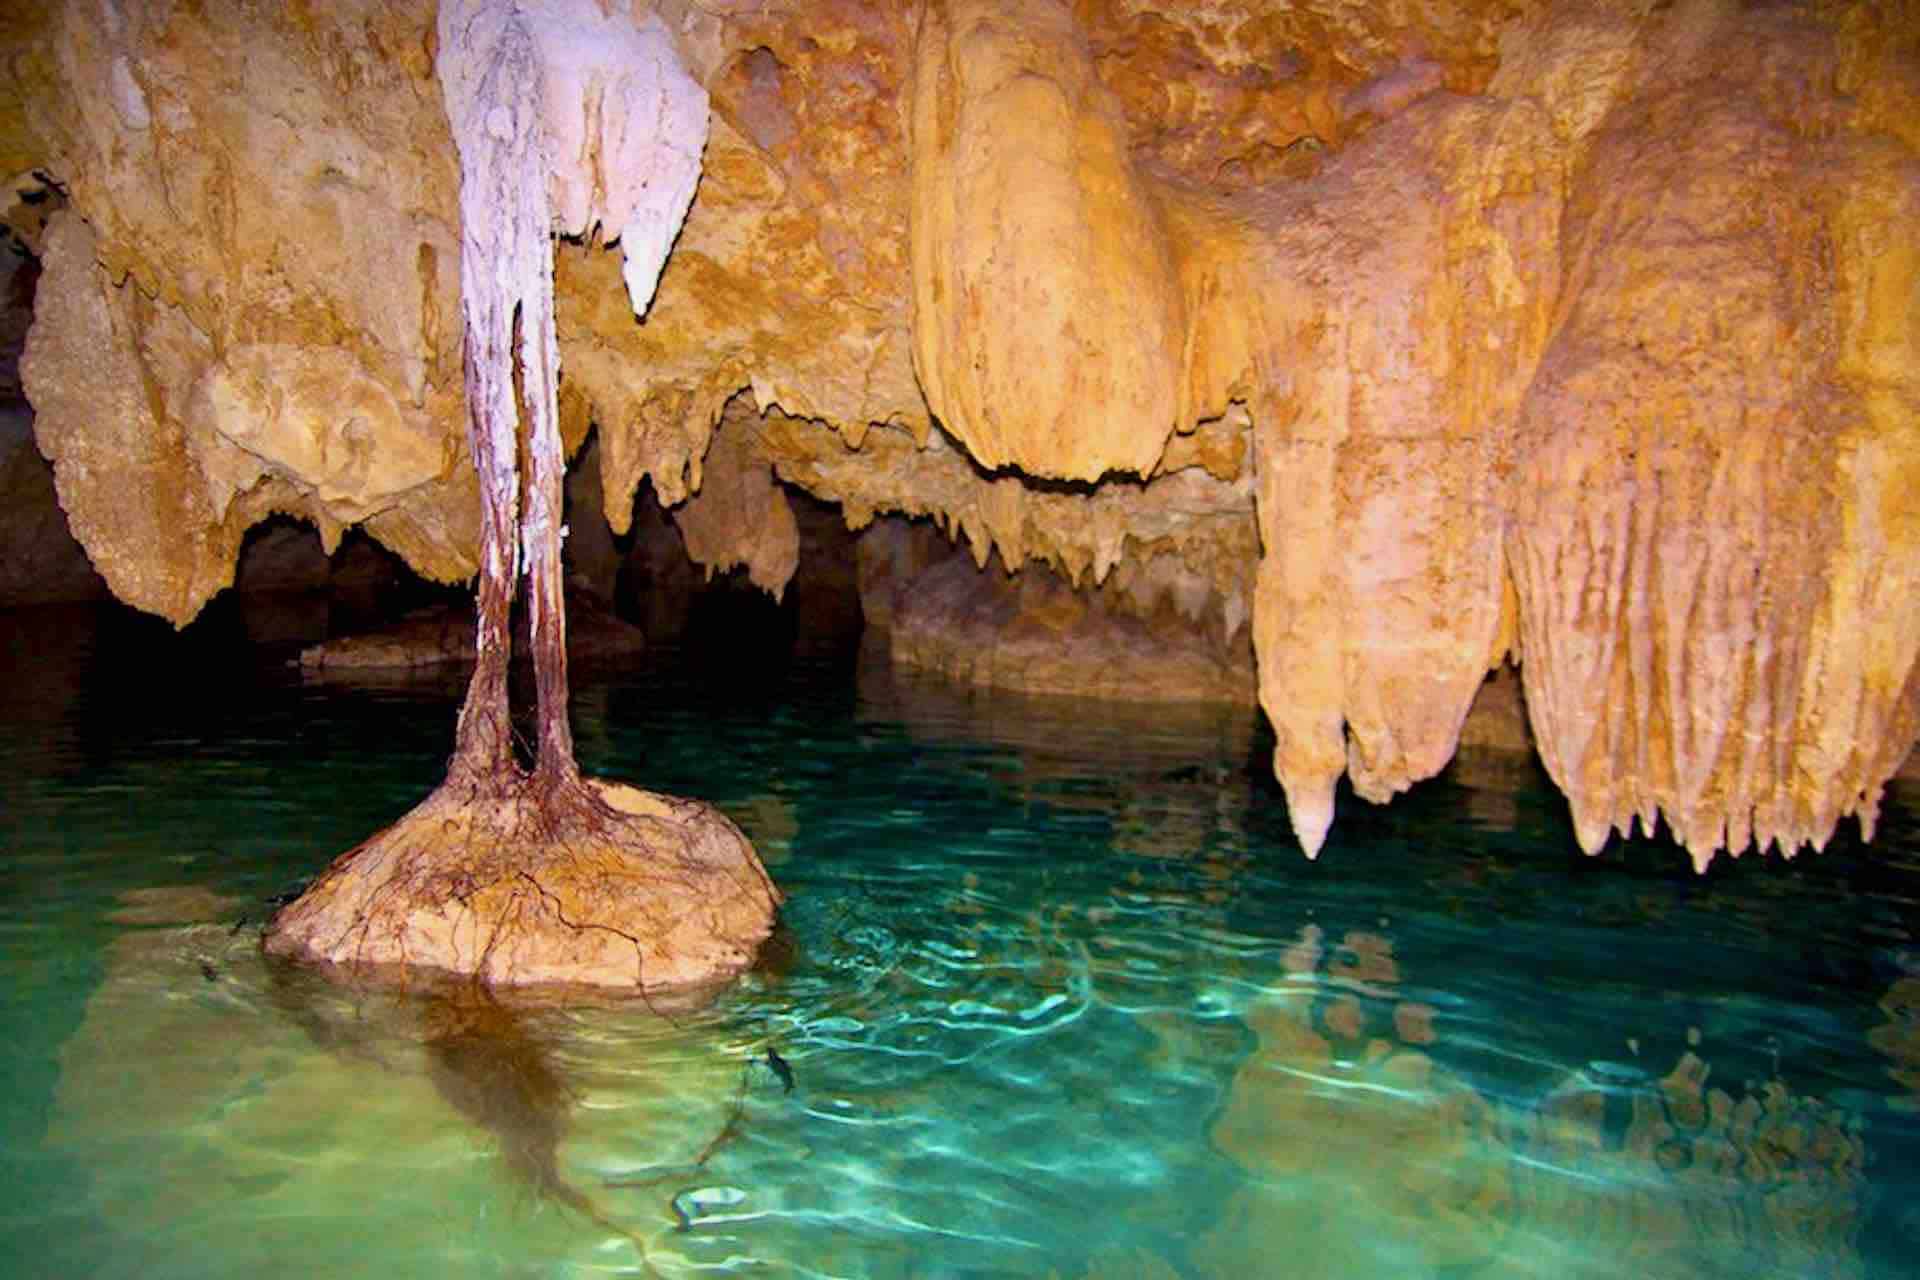 Cenote Riviera Maya sink hole jungle Mexico cave system stalactite